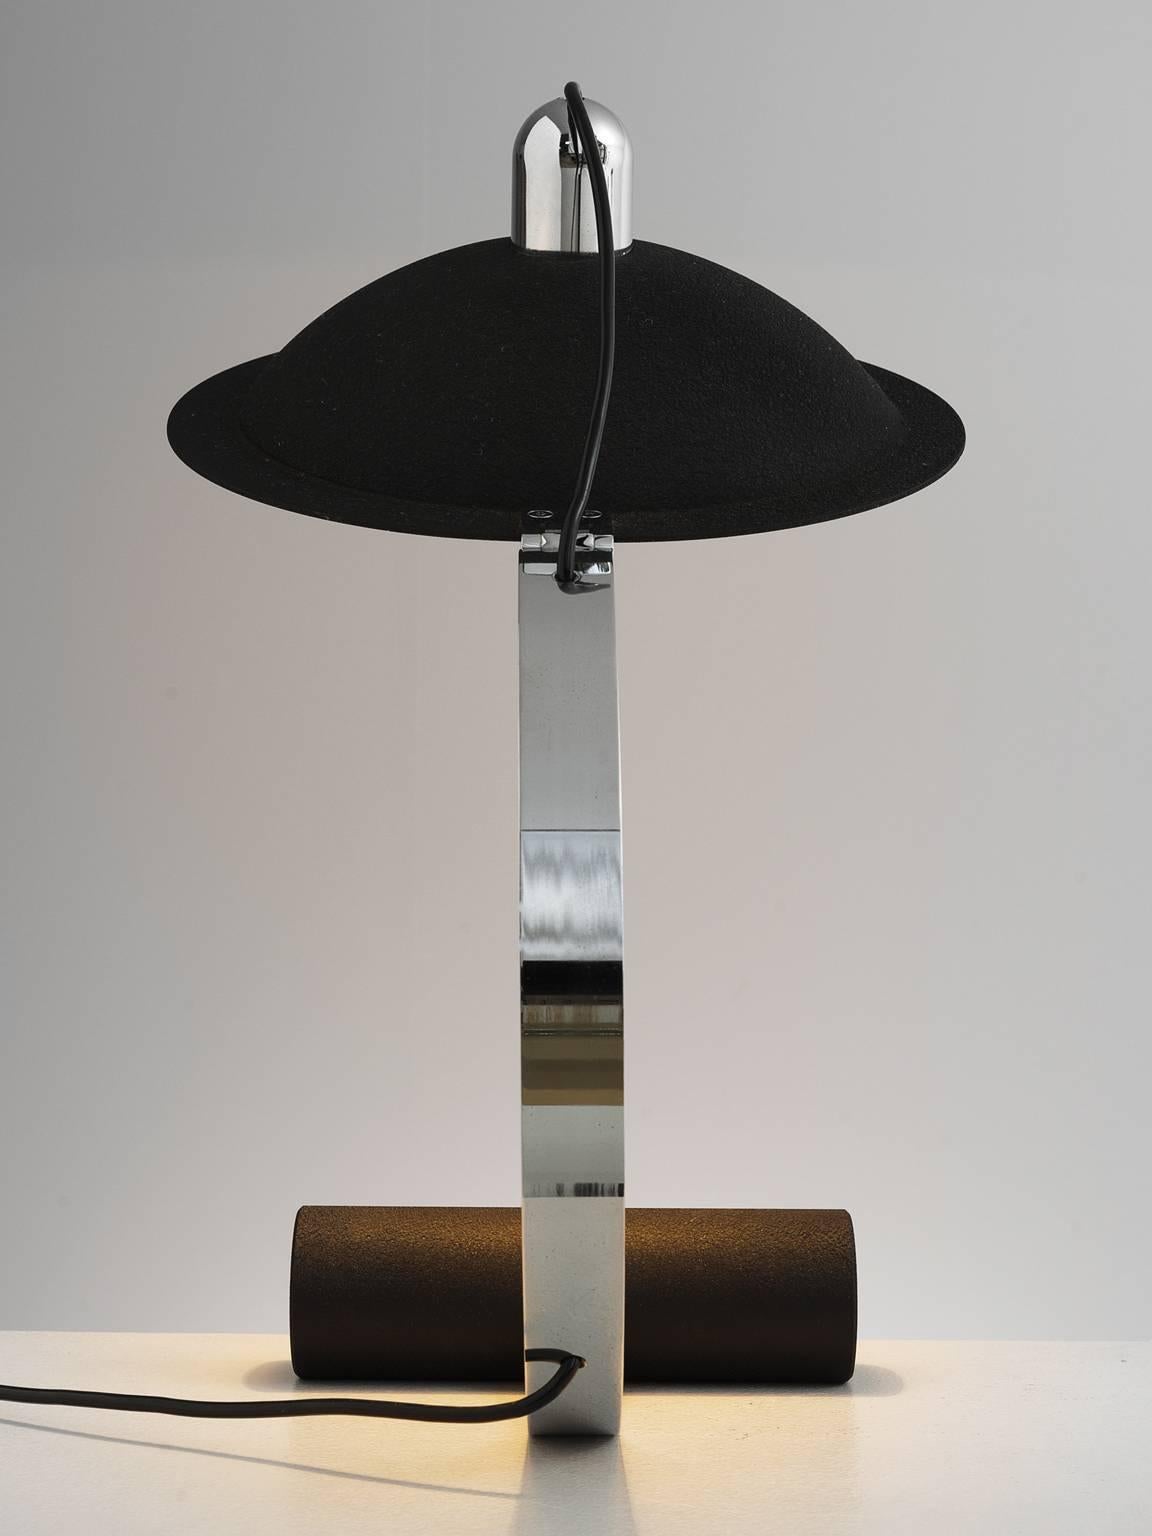 Metal Urbino De Pas and Lomazzi for Stilnovo Lamp